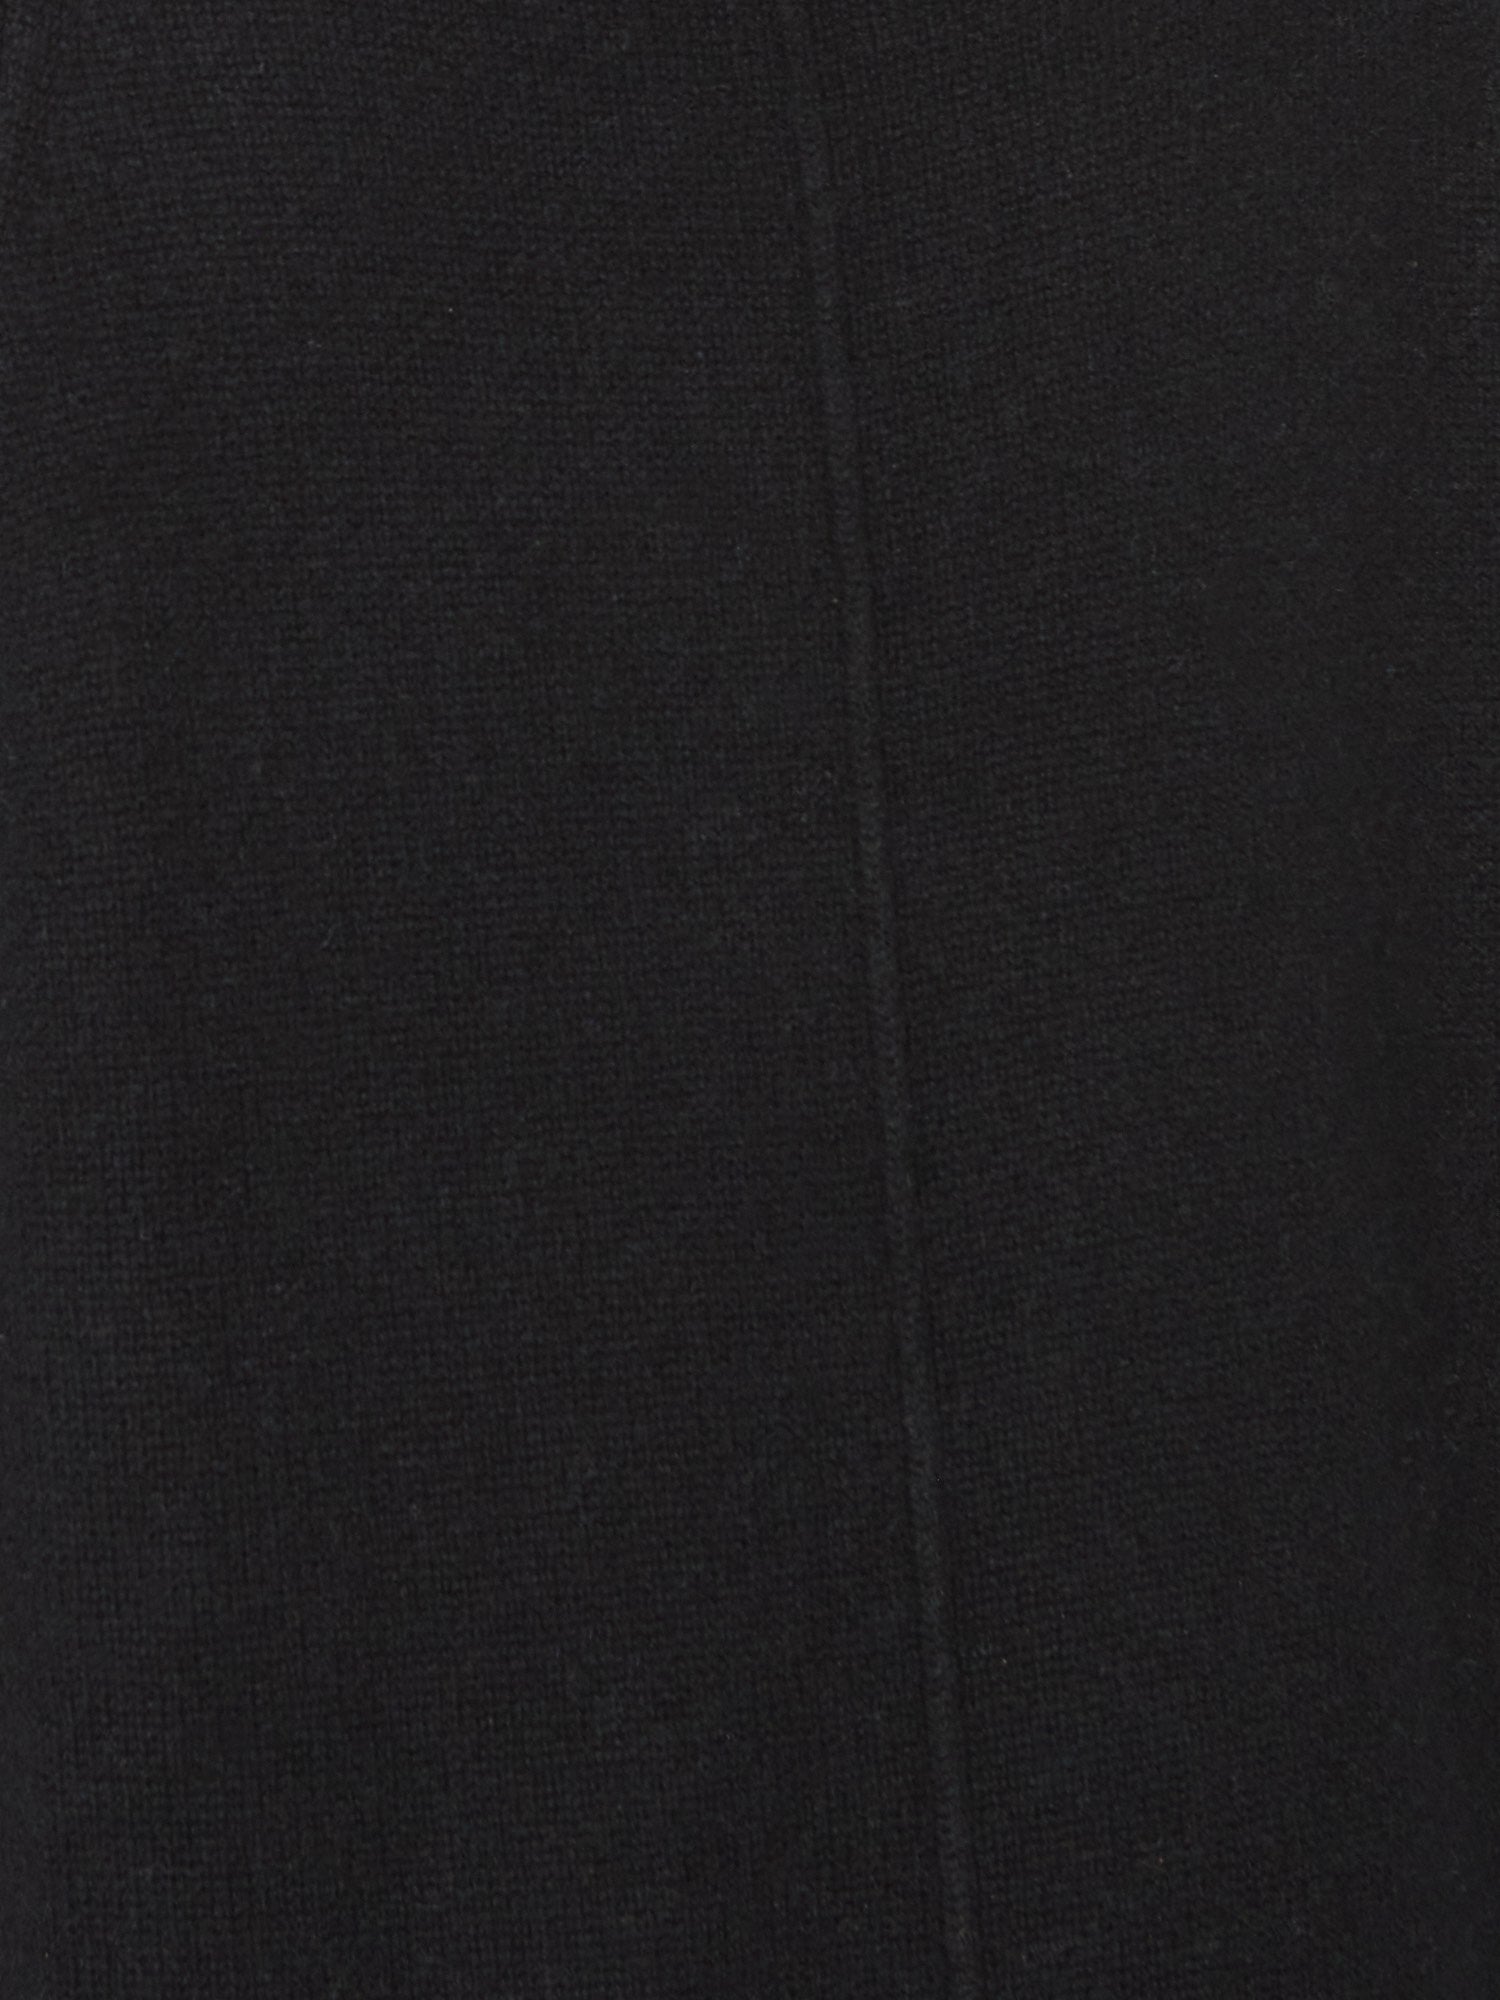 Elisa mini black lace sweater dress close up 3